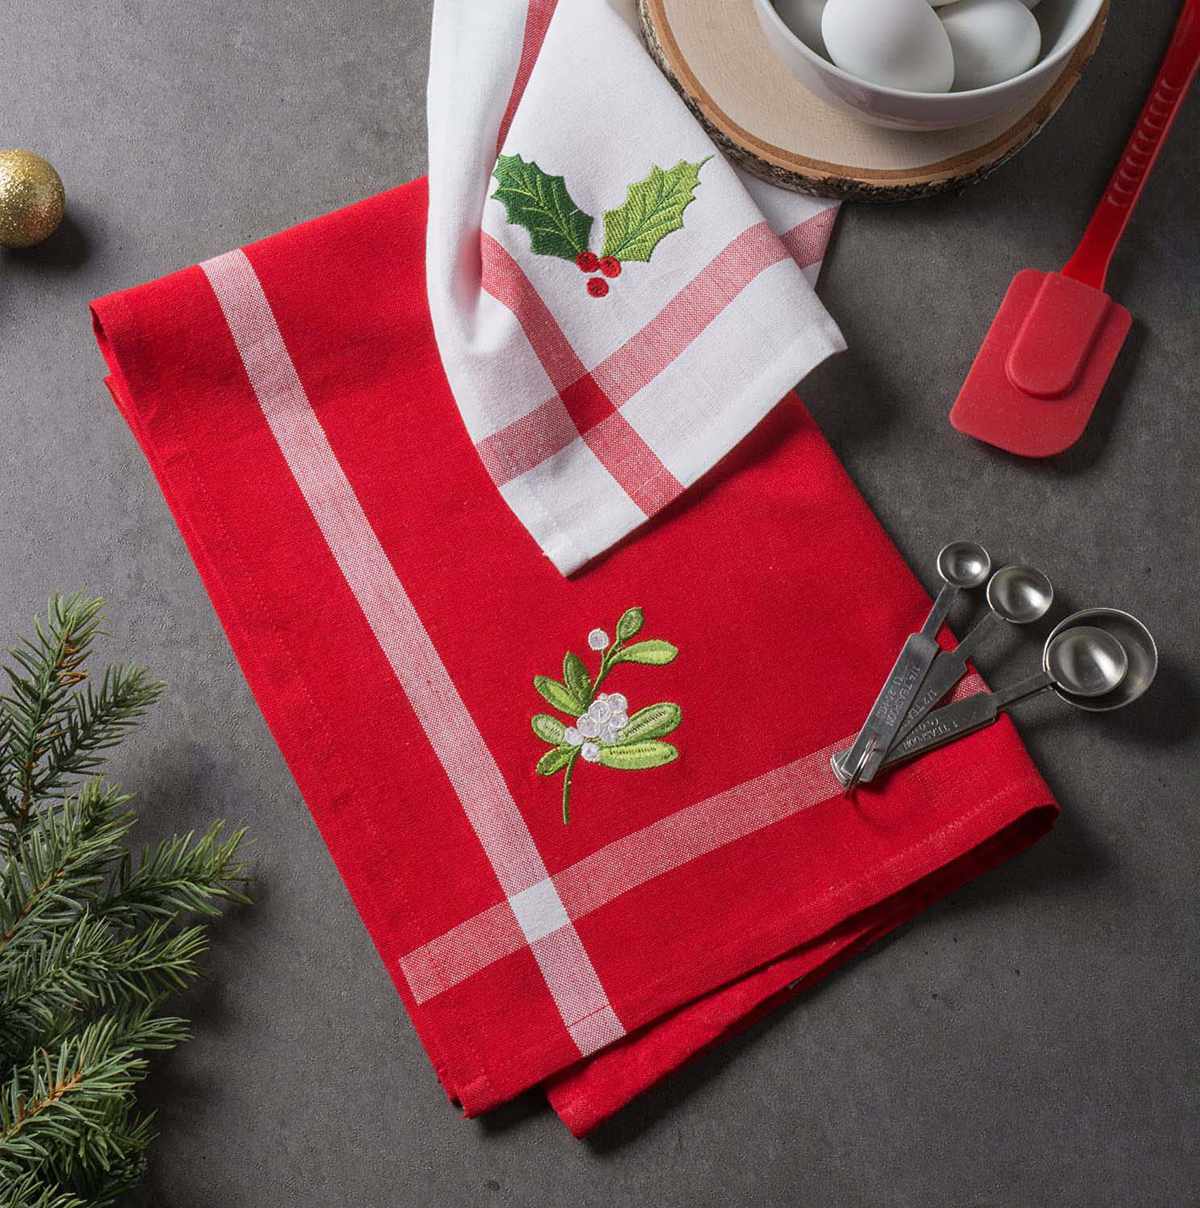 New S/2 Embroidered Pinecones Dish Towels Kitchen Tea Towel Cotton Towel Set 